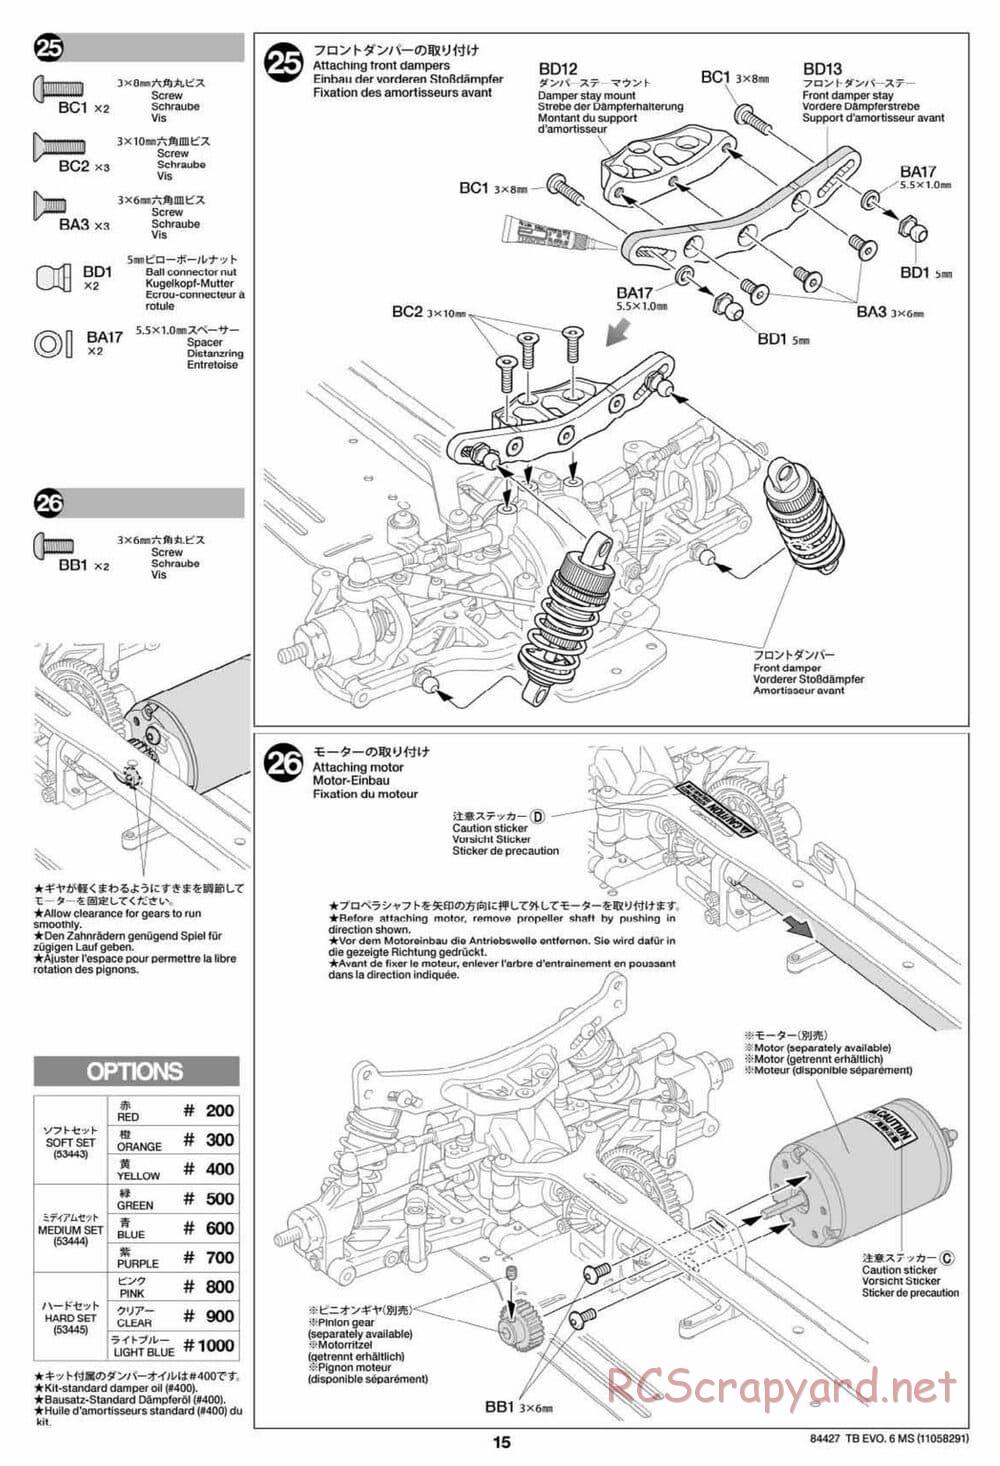 Tamiya - TB Evo.6 MS Chassis - Manual - Page 15